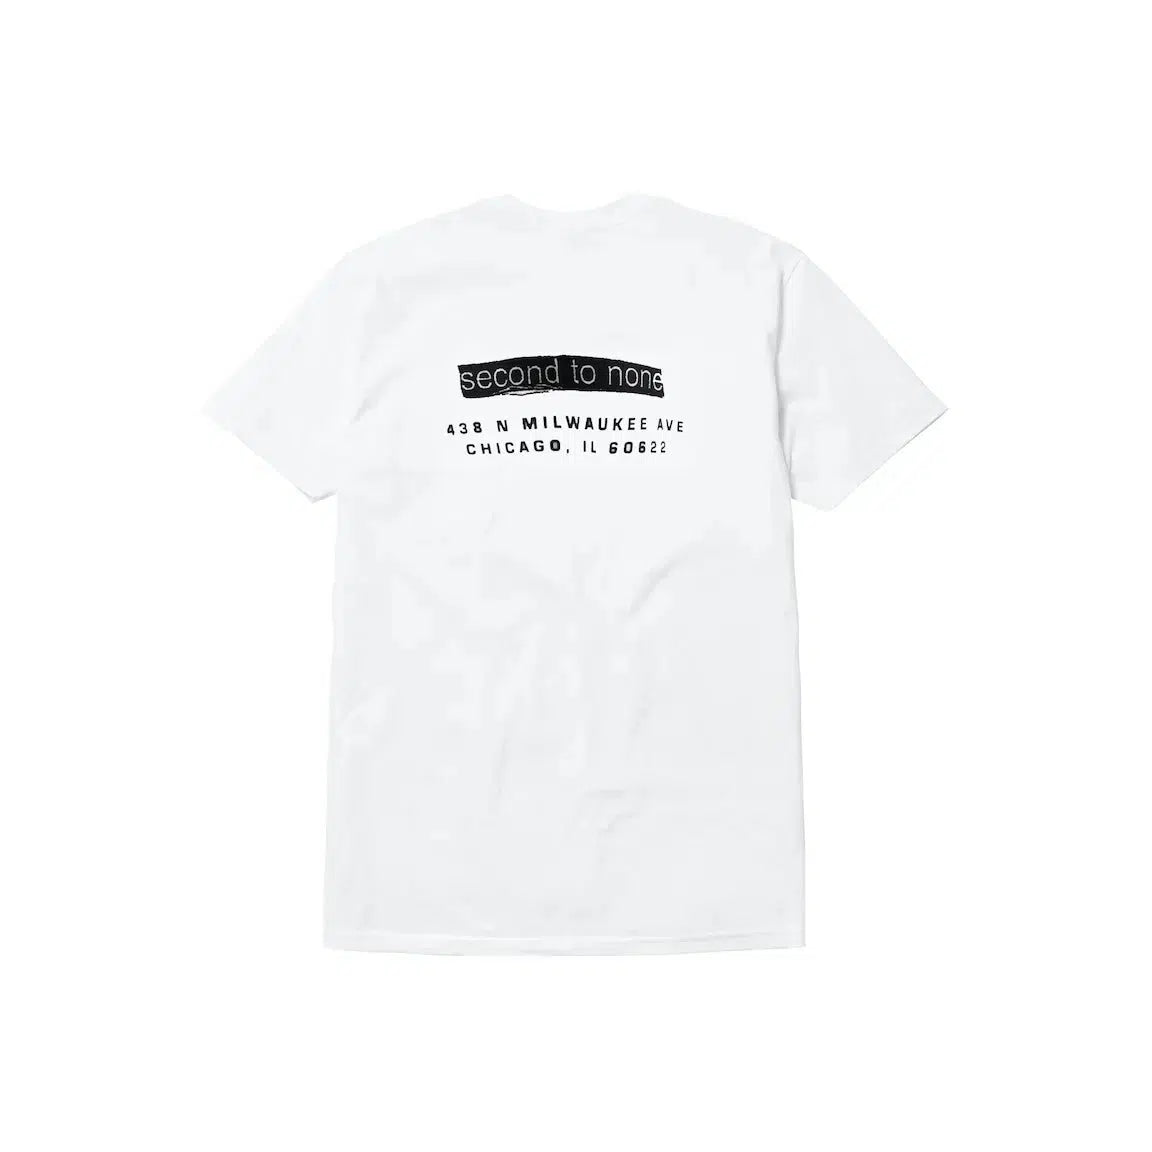 Supreme "Box Logo" T-Shirt - diy cyo customize personalize design